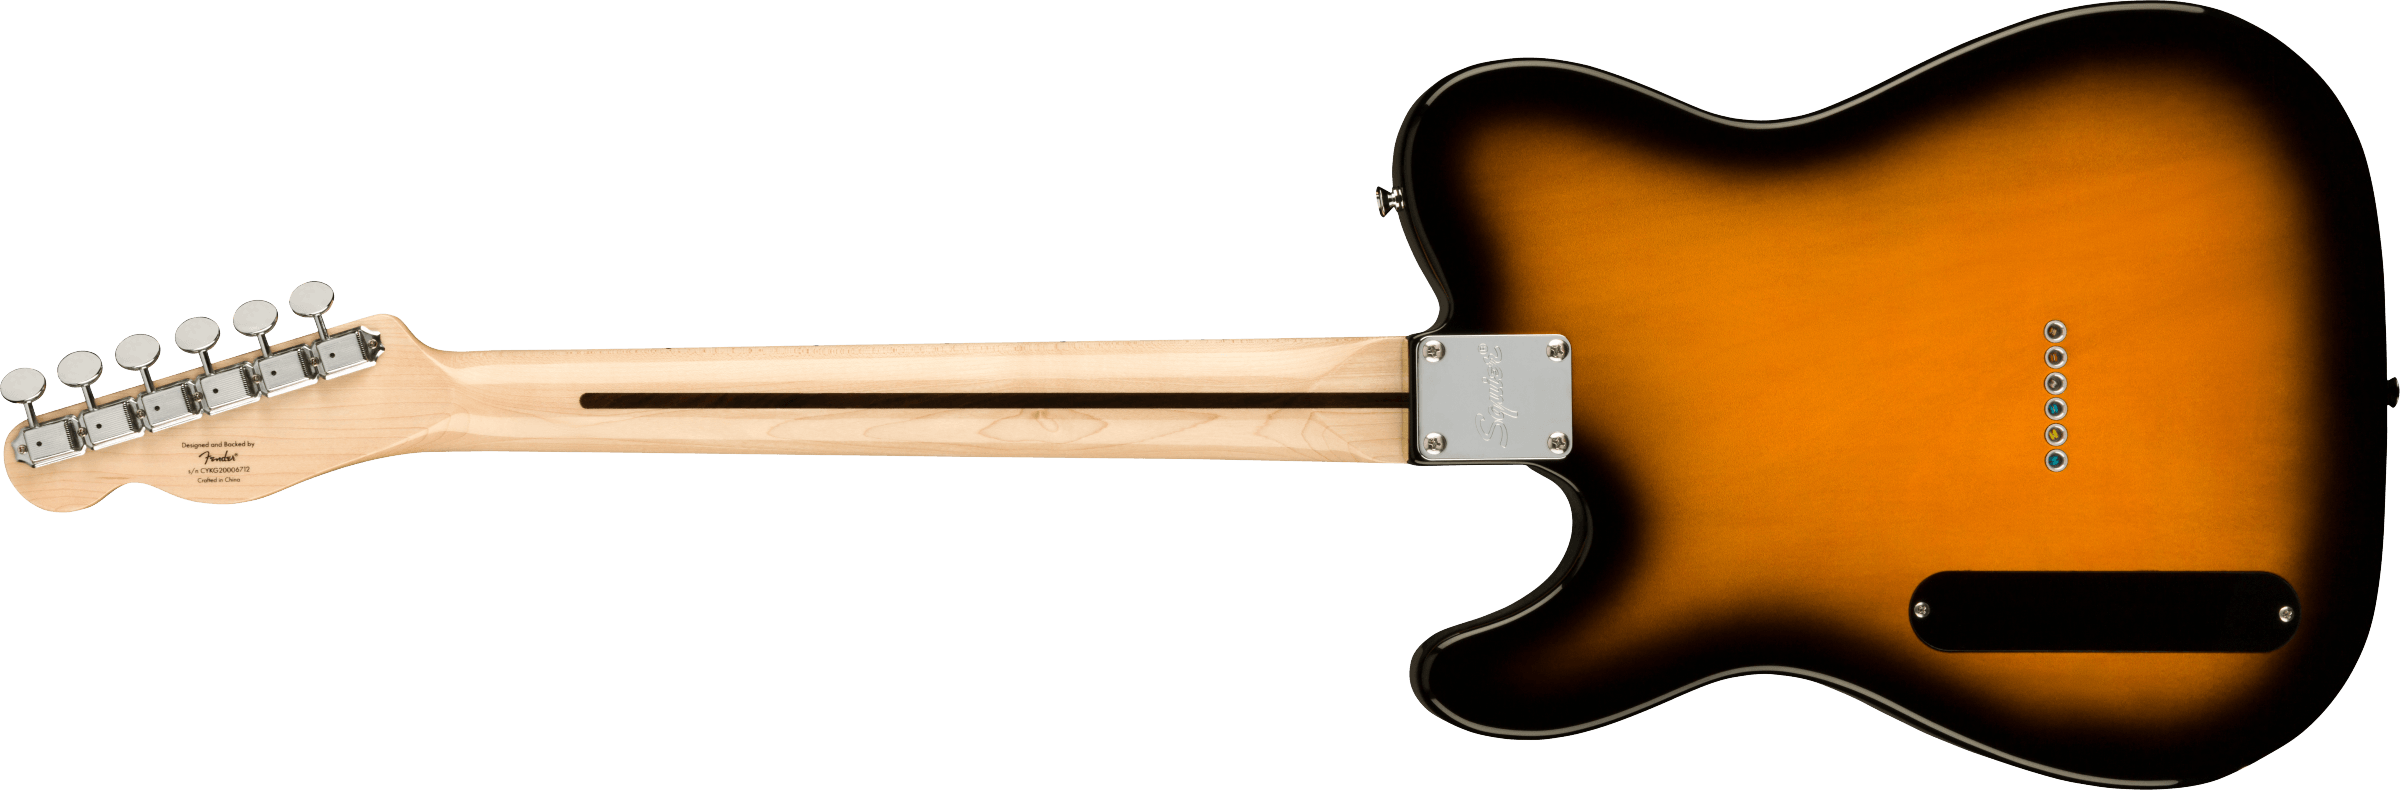 Squier Tele Thinline Cabronita Paranormal Ss Ht Mn - 2 Tone Sunburst - Tel shape electric guitar - Variation 1